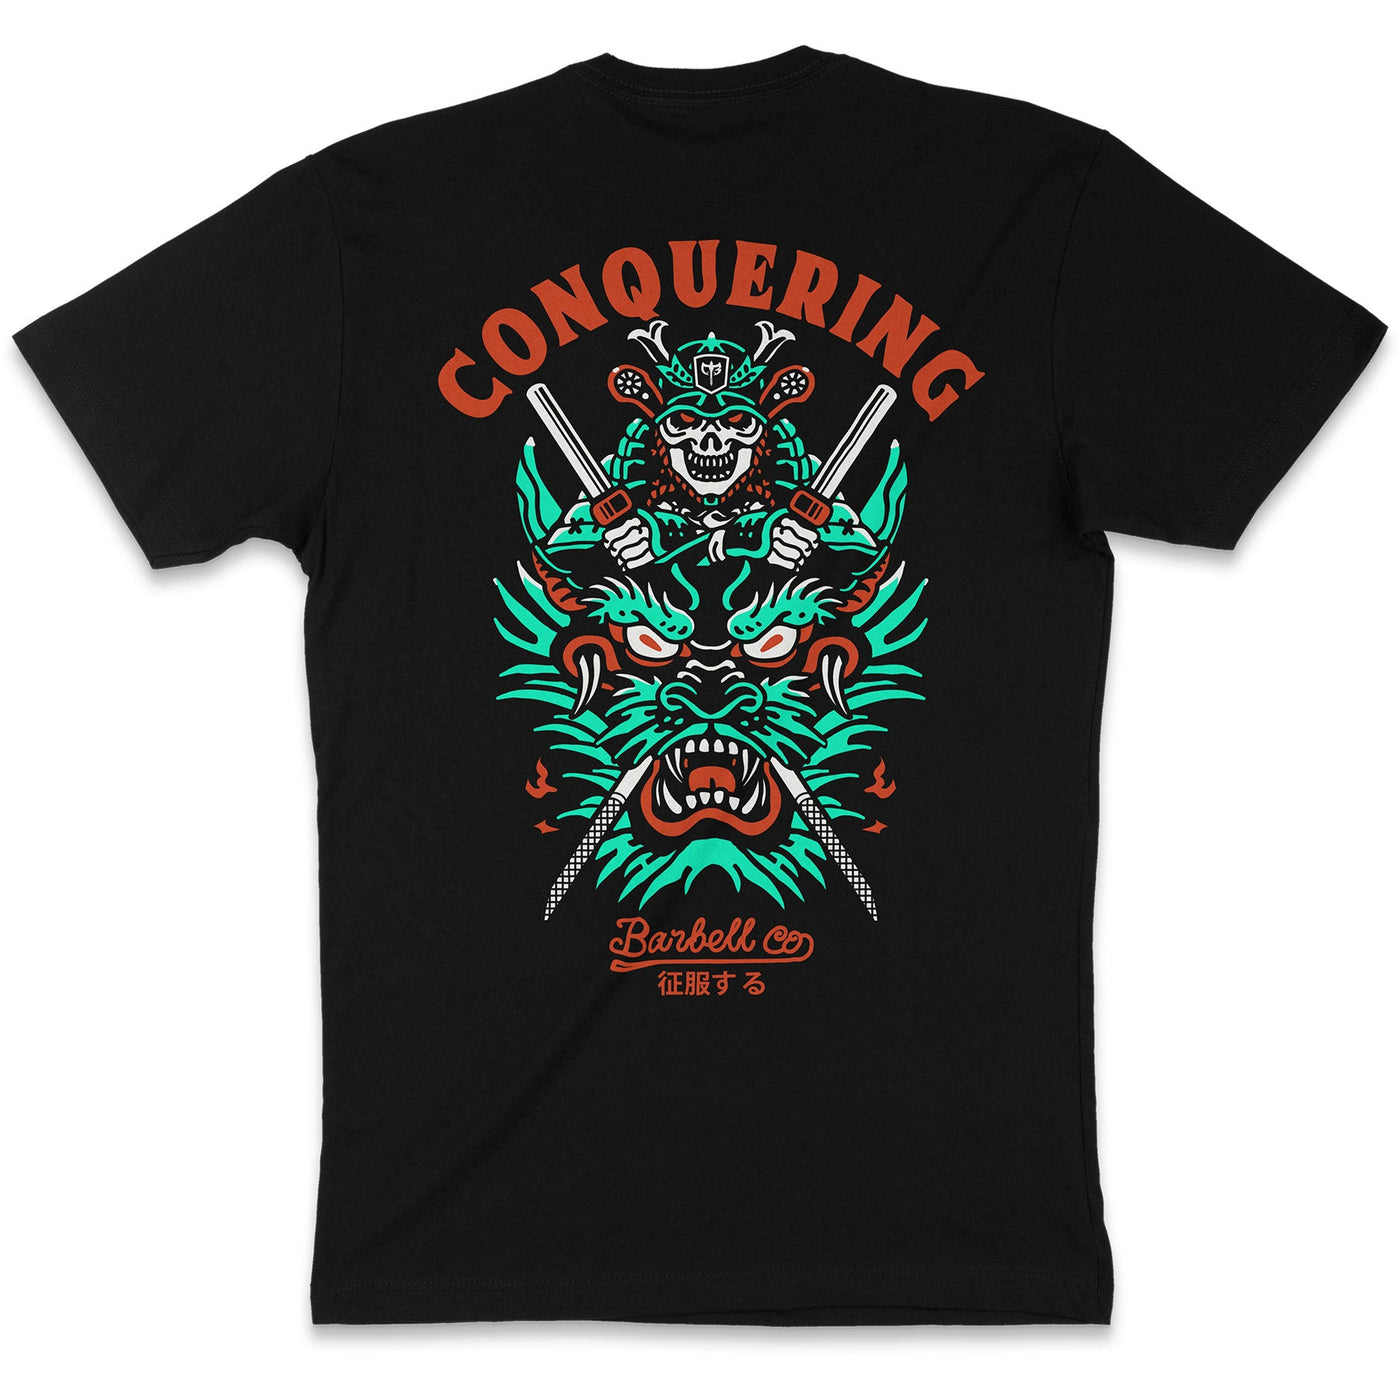 Dragon Breathable T-shirt Megabaits - carp black - T-shirts and shirts -  PROTACKLESHOP